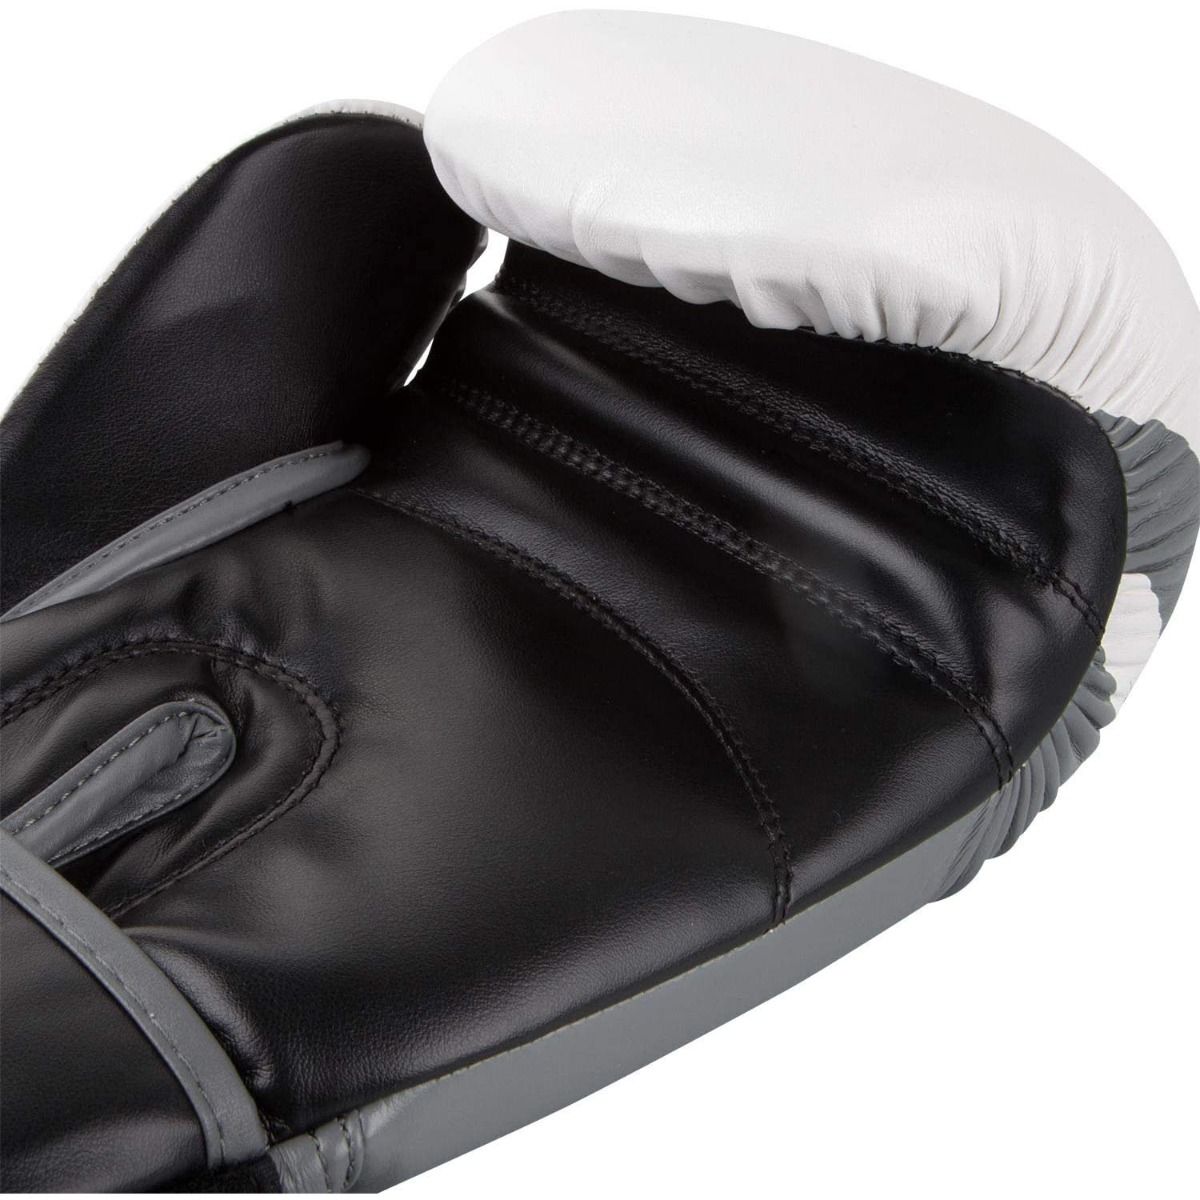 Venum Contender 2.0 Boxing Gloves White Grey Black - 8 Oz -14 Oz